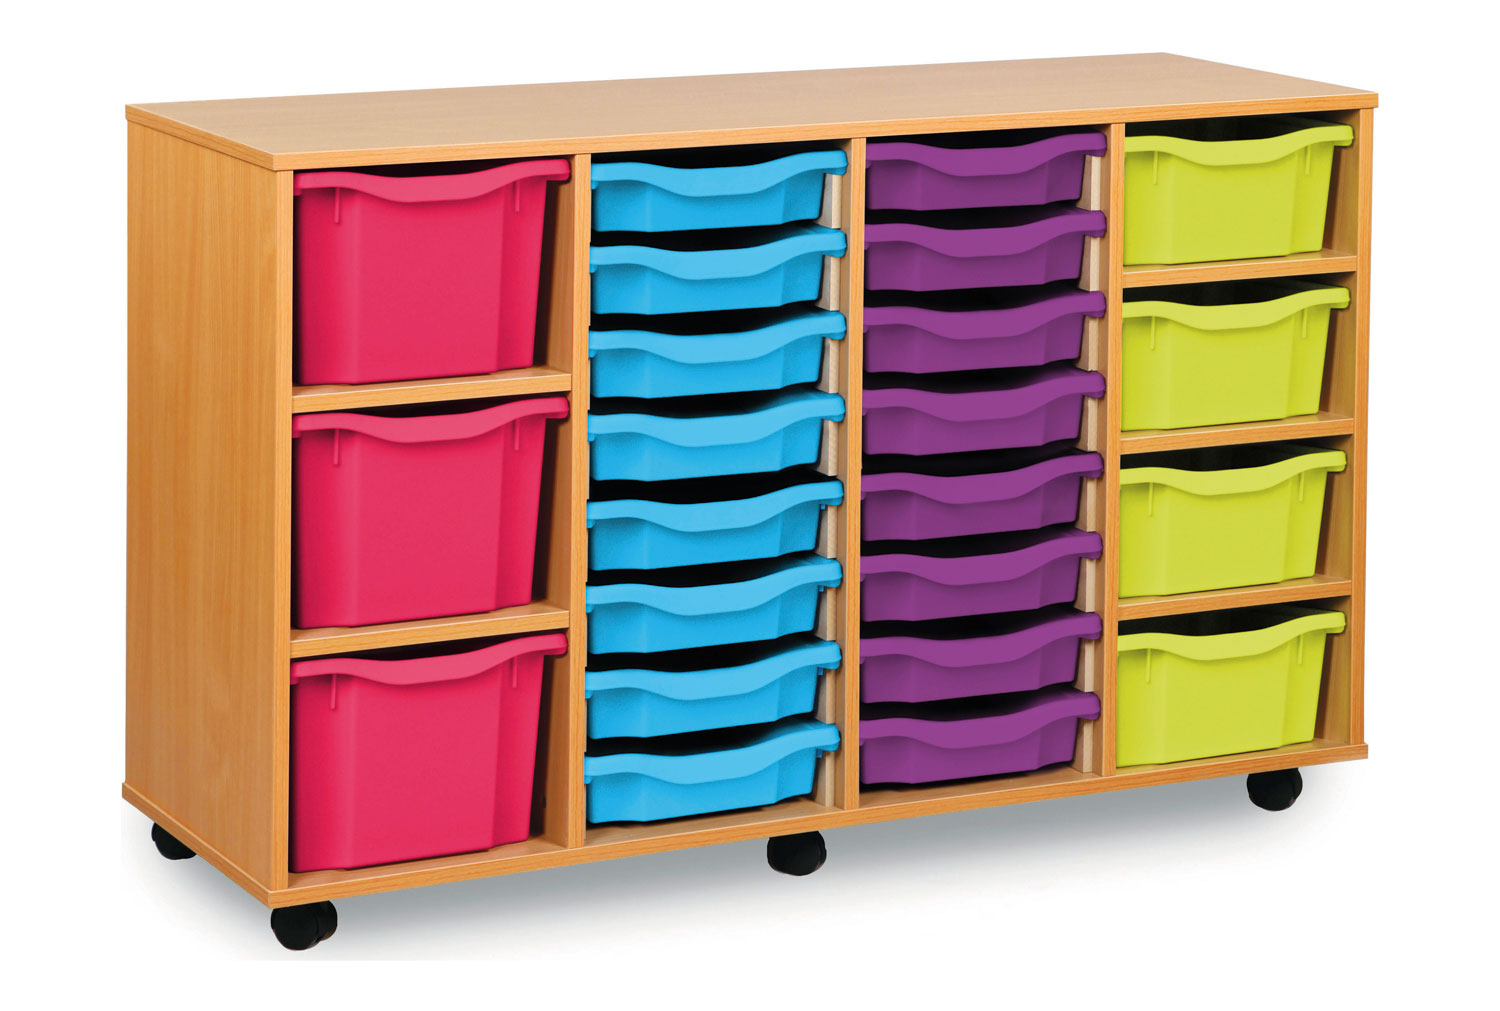 23 Variety Classroom Tray Storage Unit, Red/Blue/Green/Yellow Classroom Trays